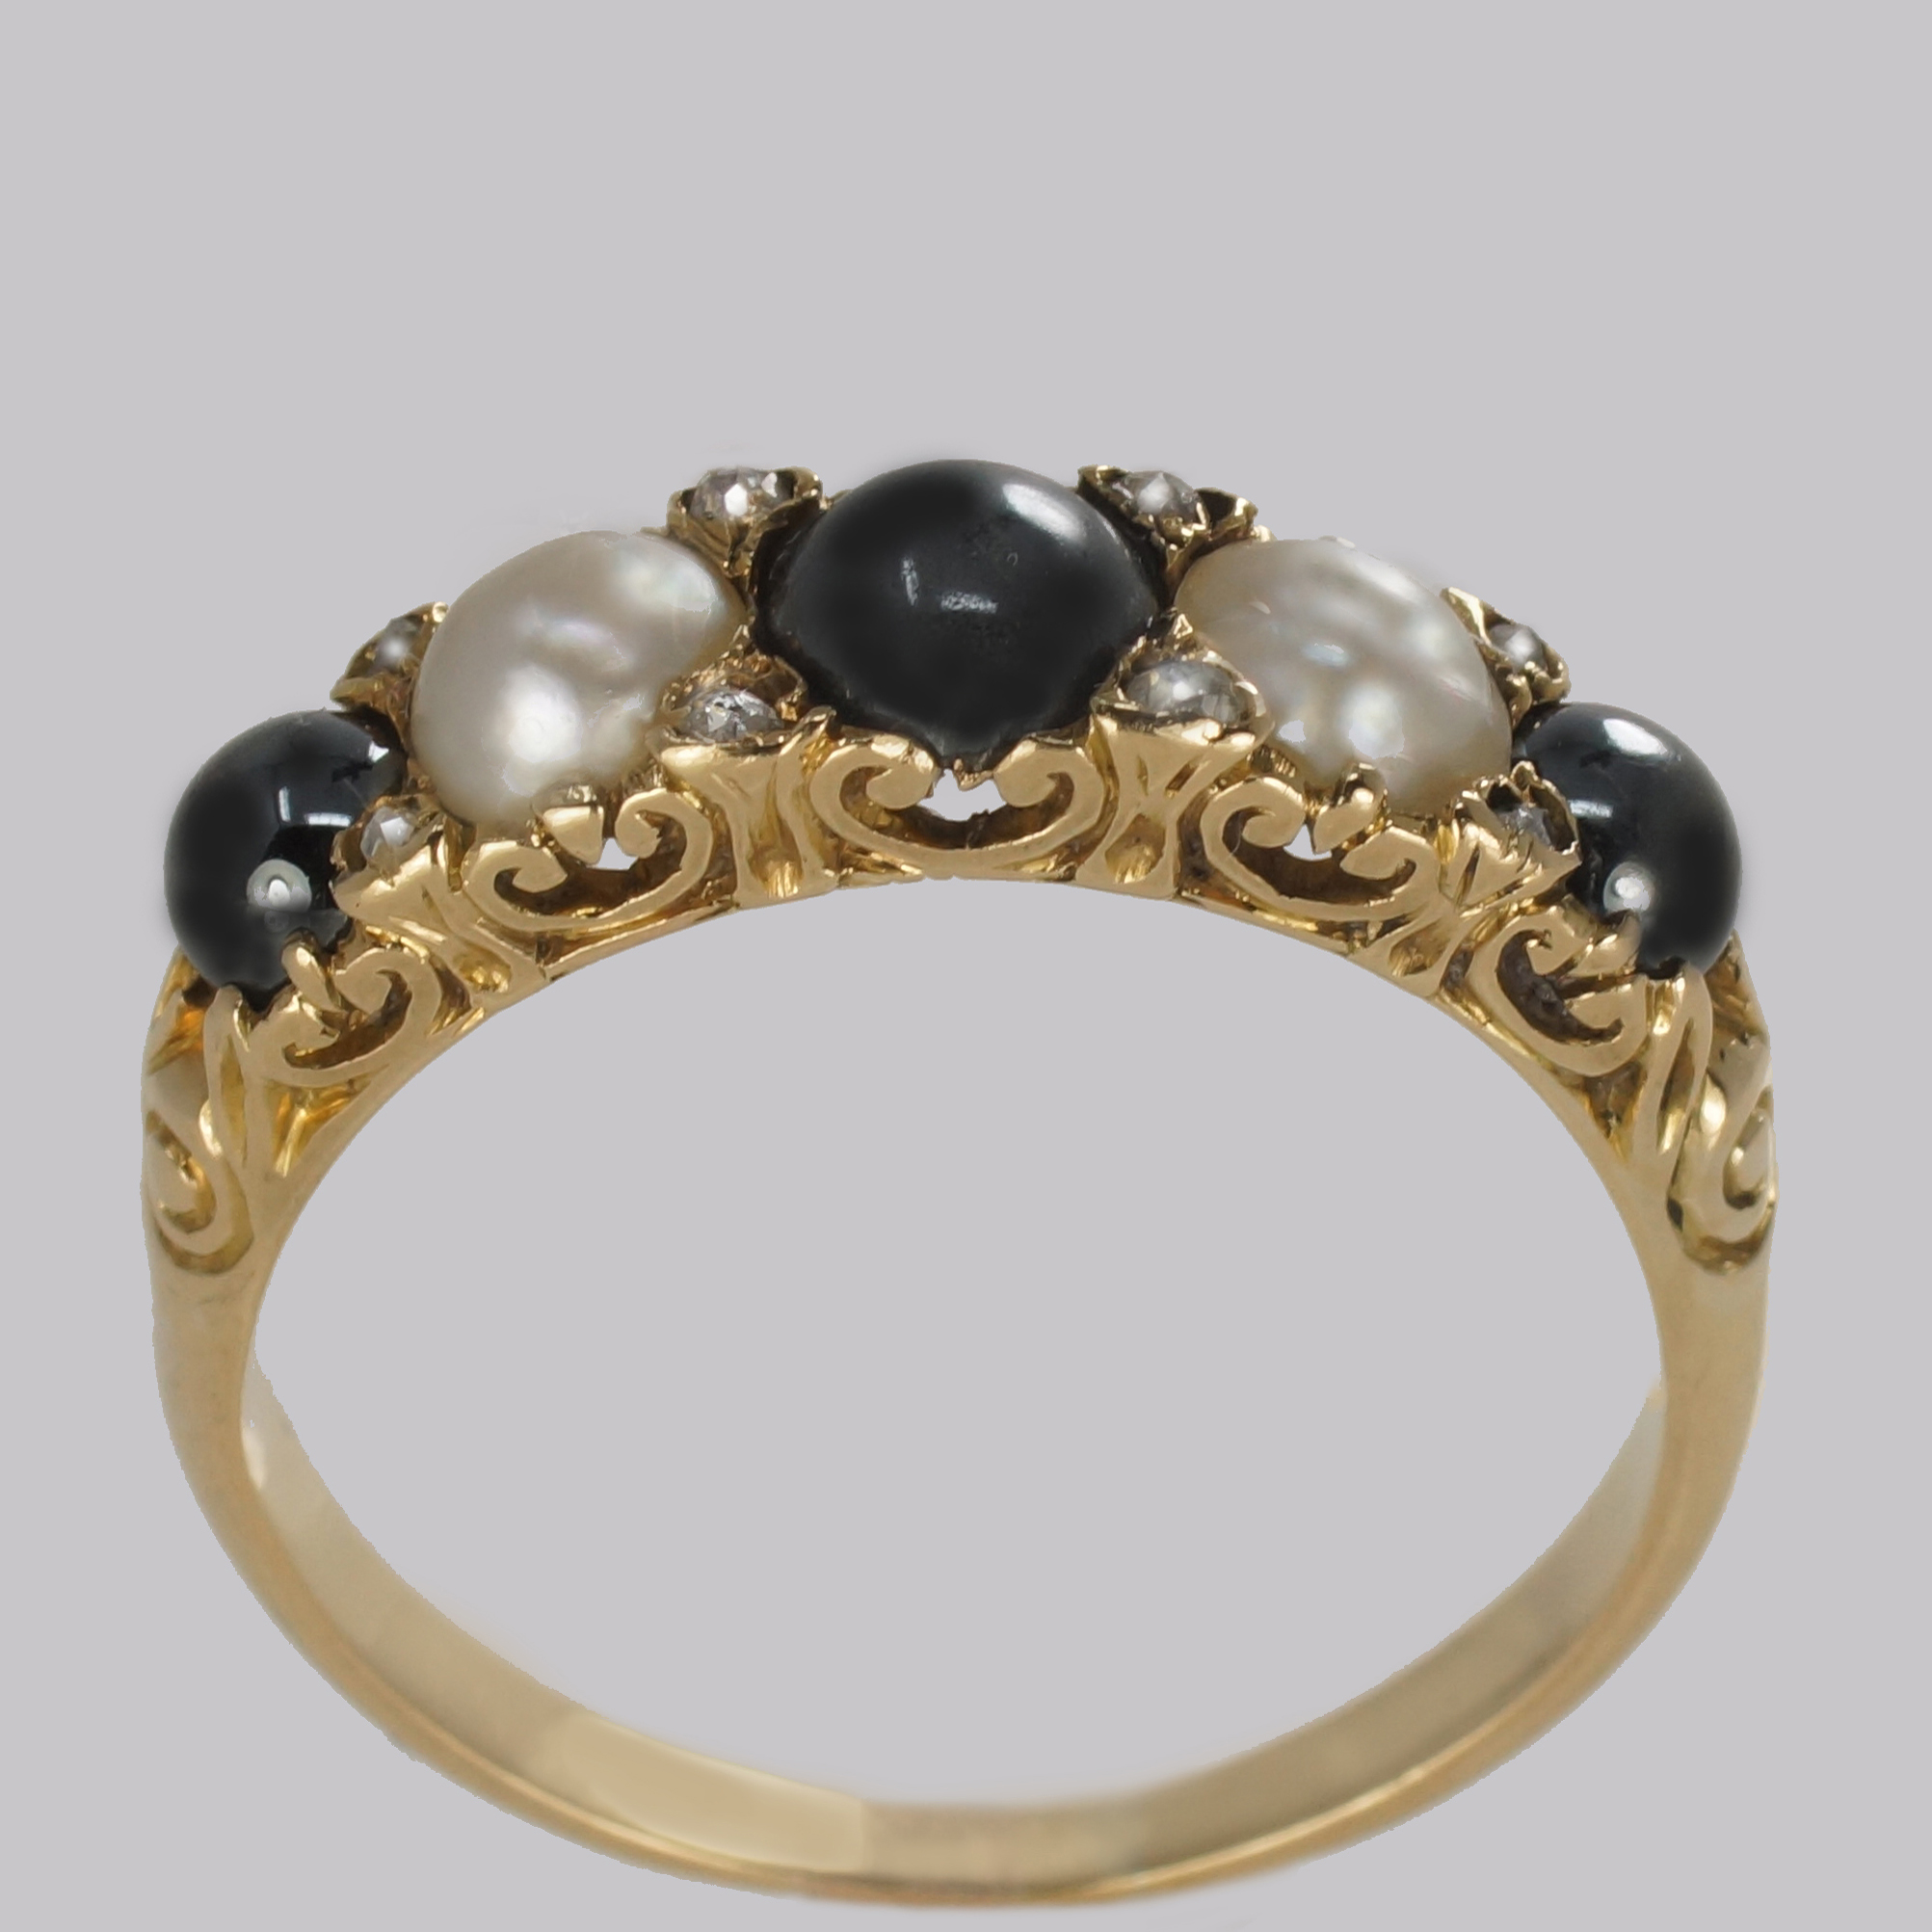 Antique White & Black Pearl Ring